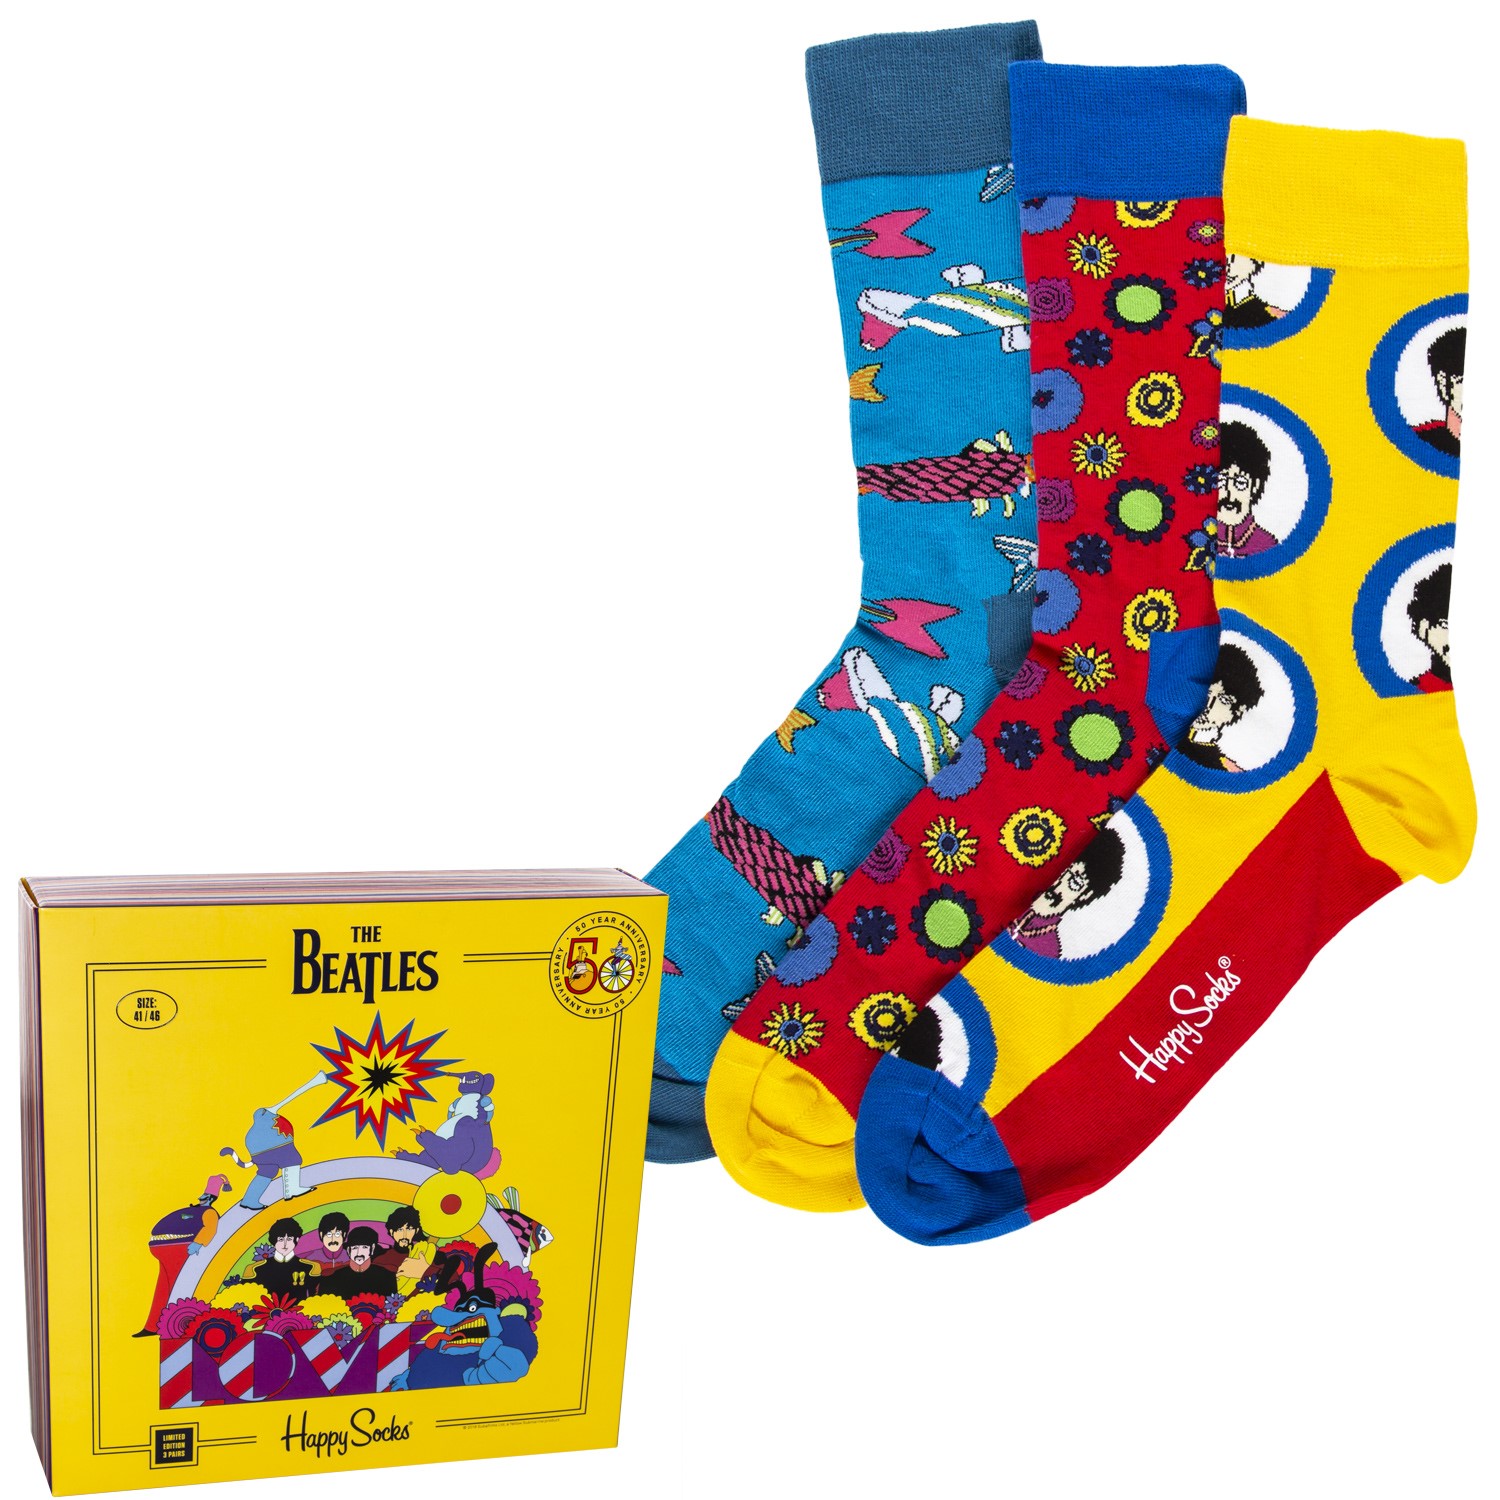 Happy Socks The Beatles Socks Gift Box